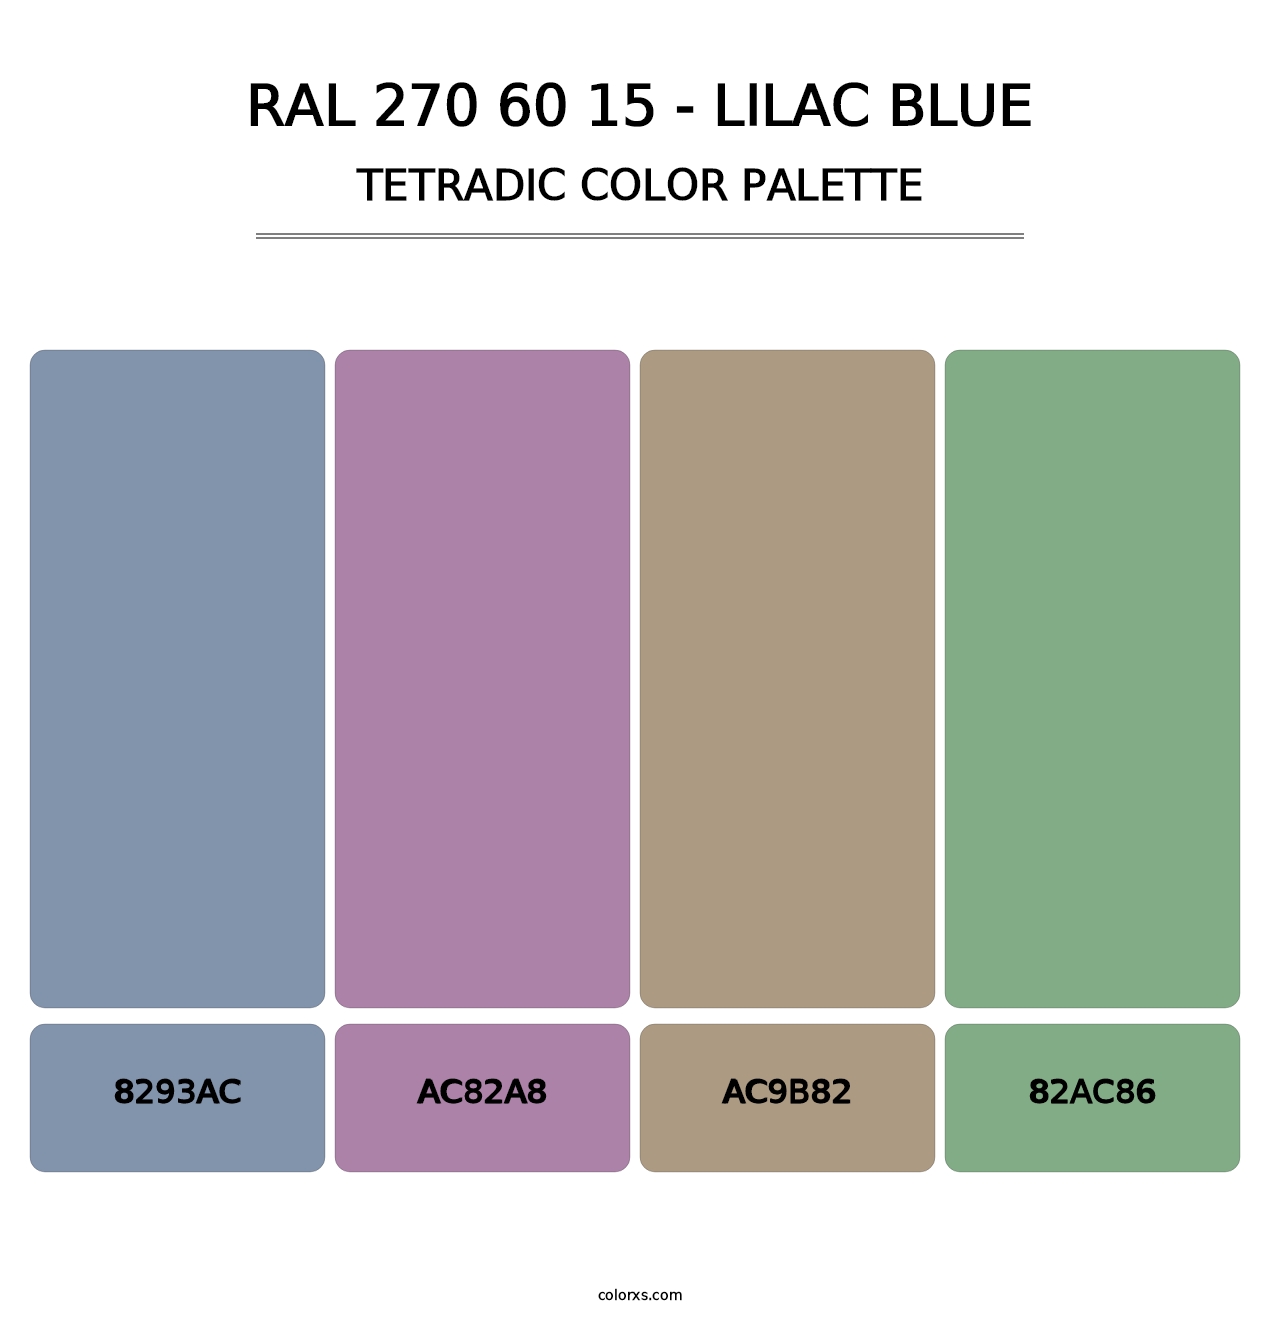 RAL 270 60 15 - Lilac Blue - Tetradic Color Palette